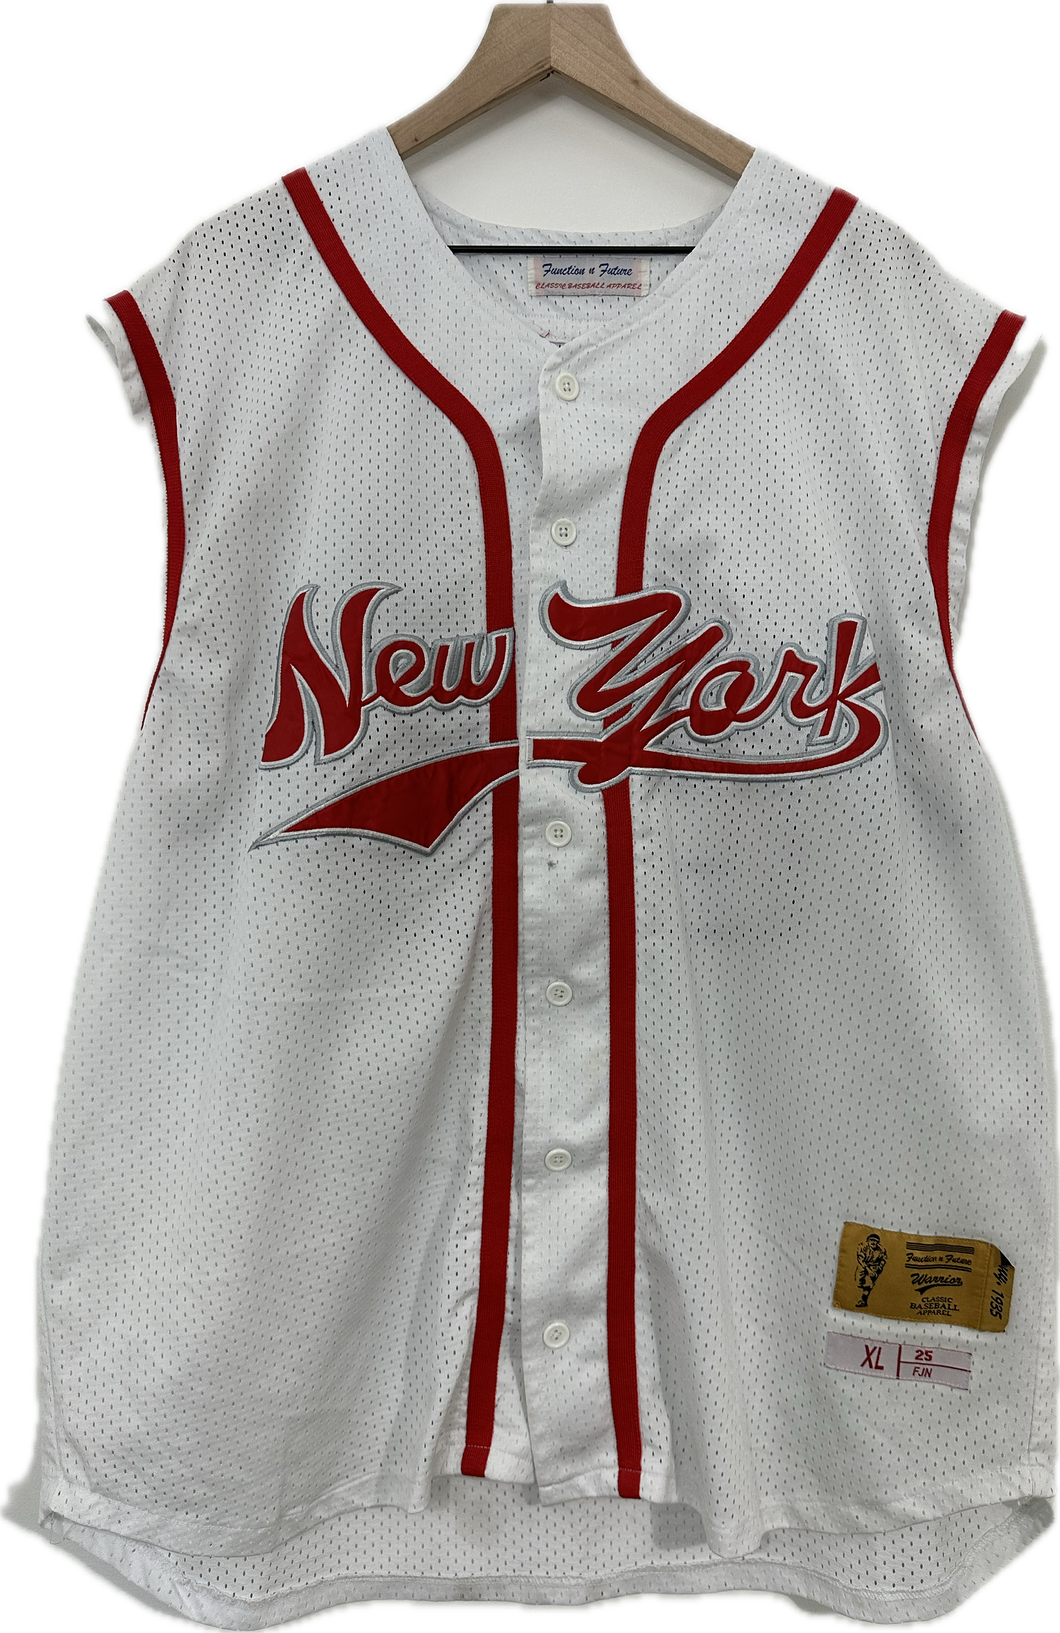 Vintage New York Sleeveless Baseball Jersey